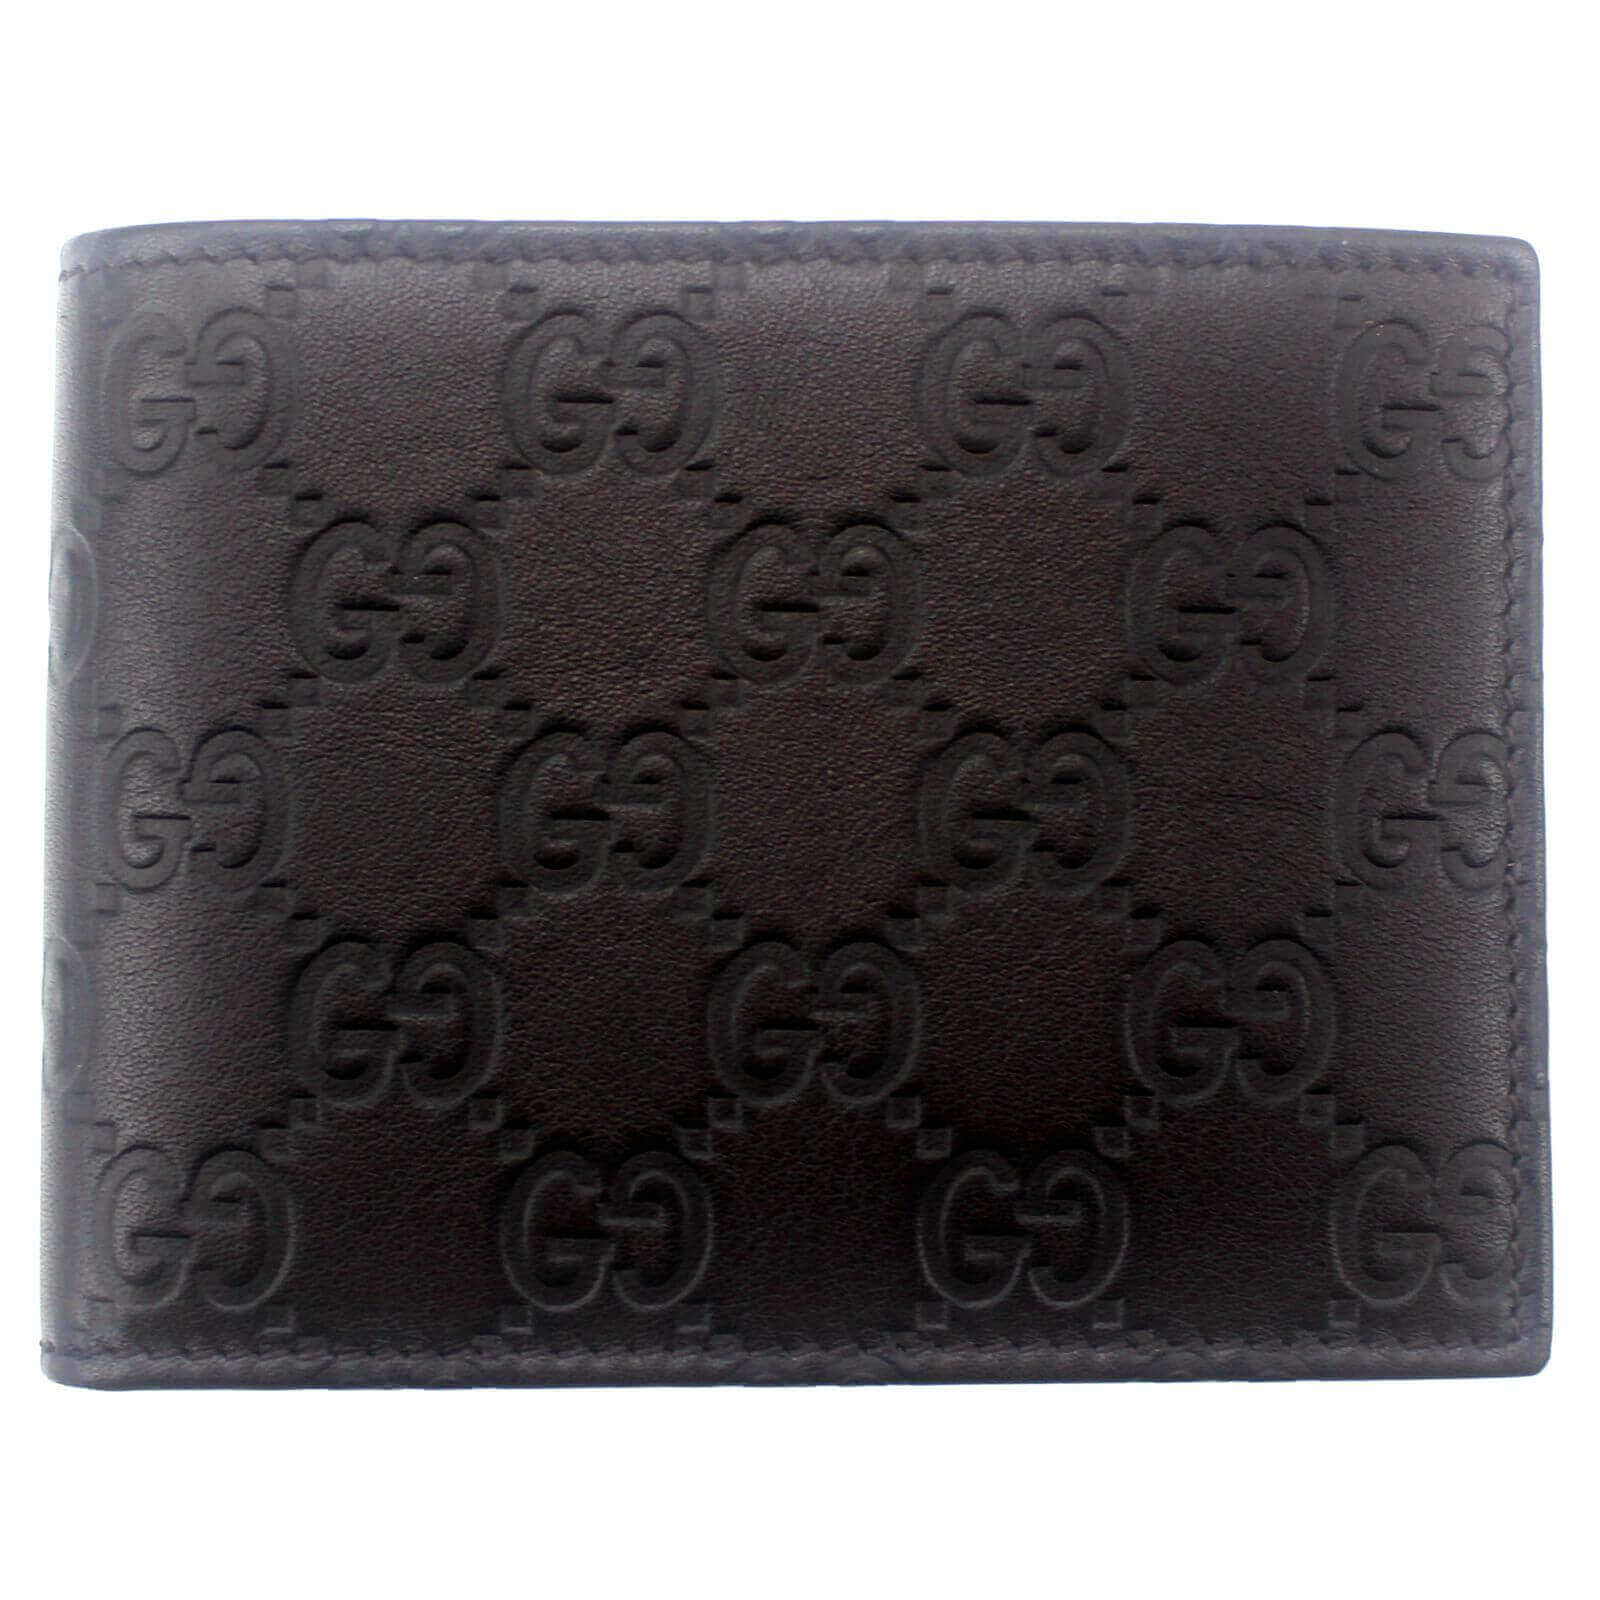 Bermuda Men's Genuine Leather Wallet, Pocket Purse - Green at Rs 599.00 |  Men Leather Wallet | ID: 2851994601348